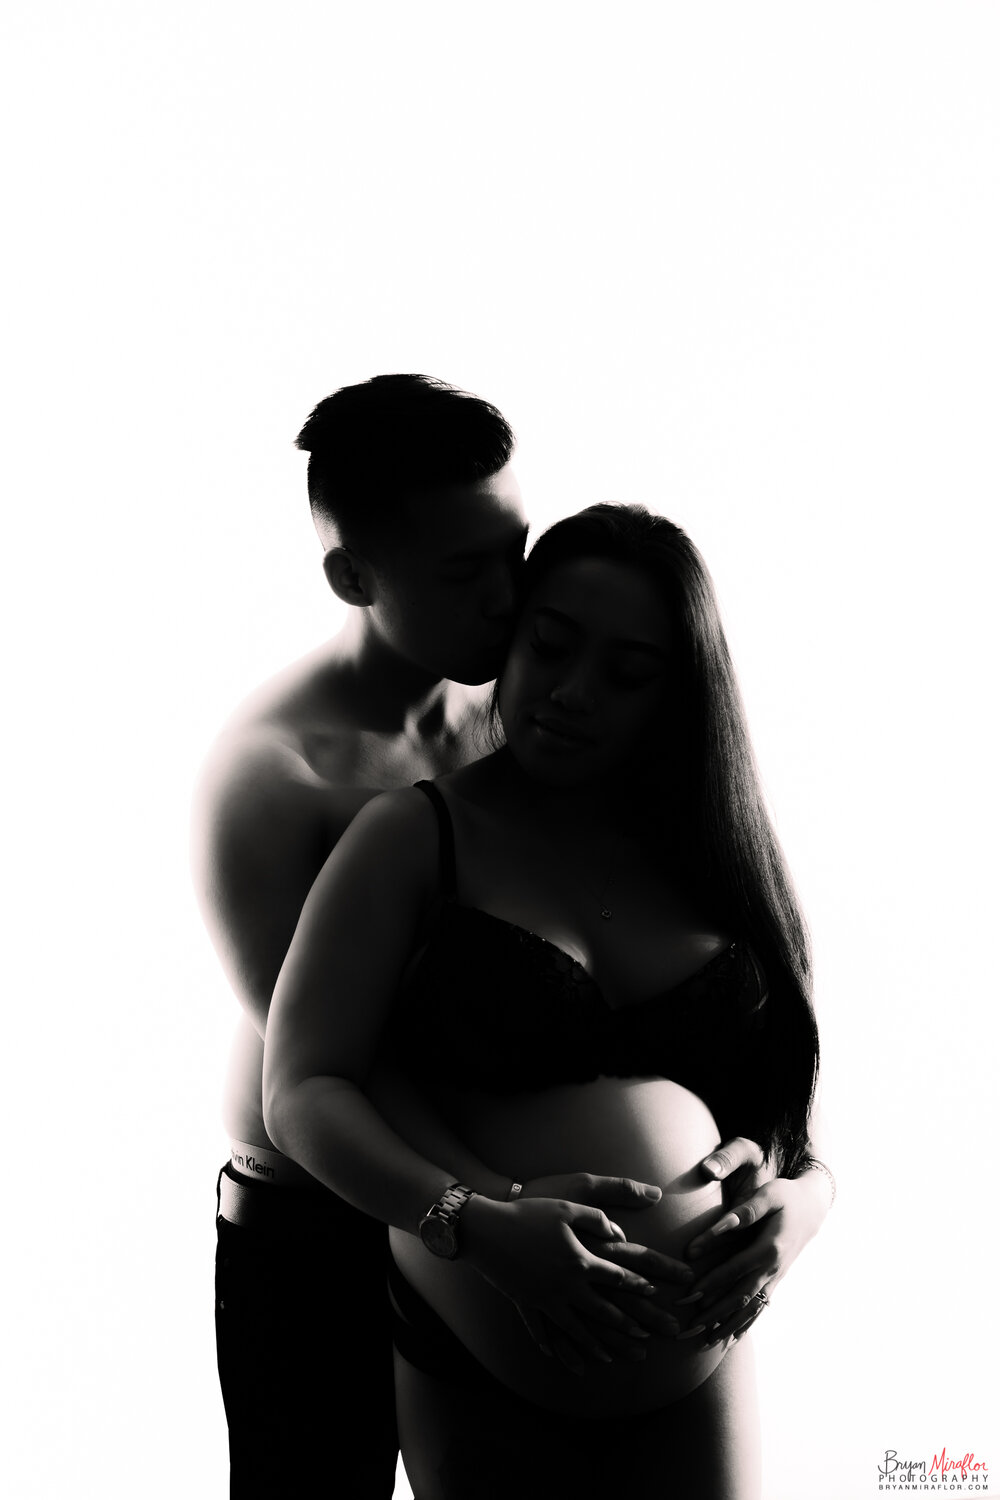 Bryan-Miraflor-Photography-Nguyen-Maternity-Photoshoot-FD-PhotoStudio-2020-024.jpg